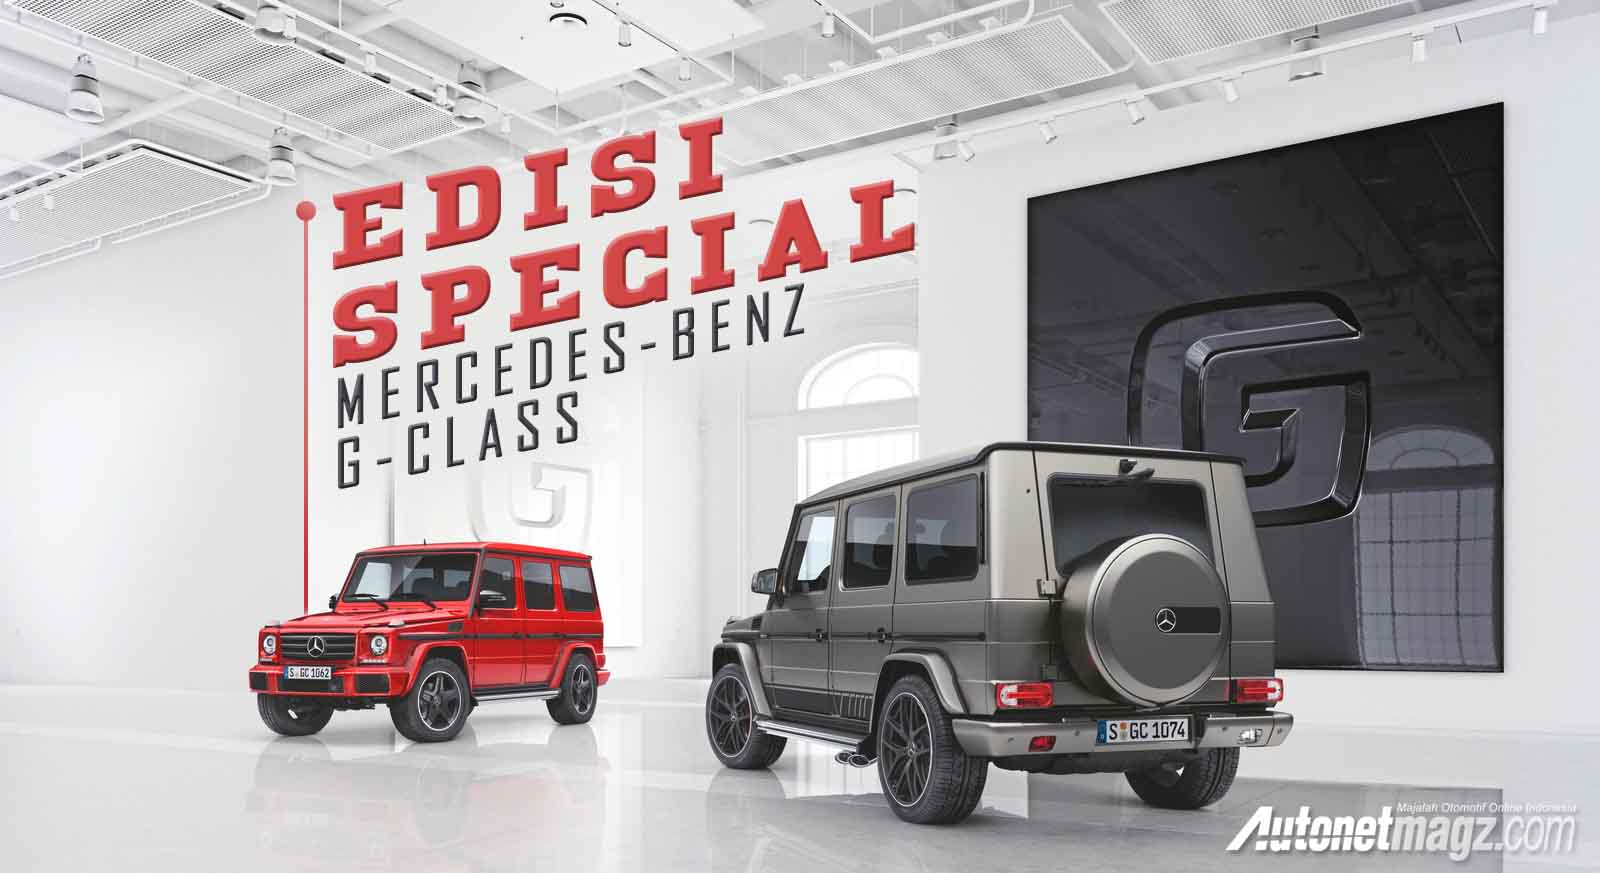 Berita, banner gclass seri khusus: Mercedes-Benz Perkenalkan Dua Edisi Spesial dari G-Class